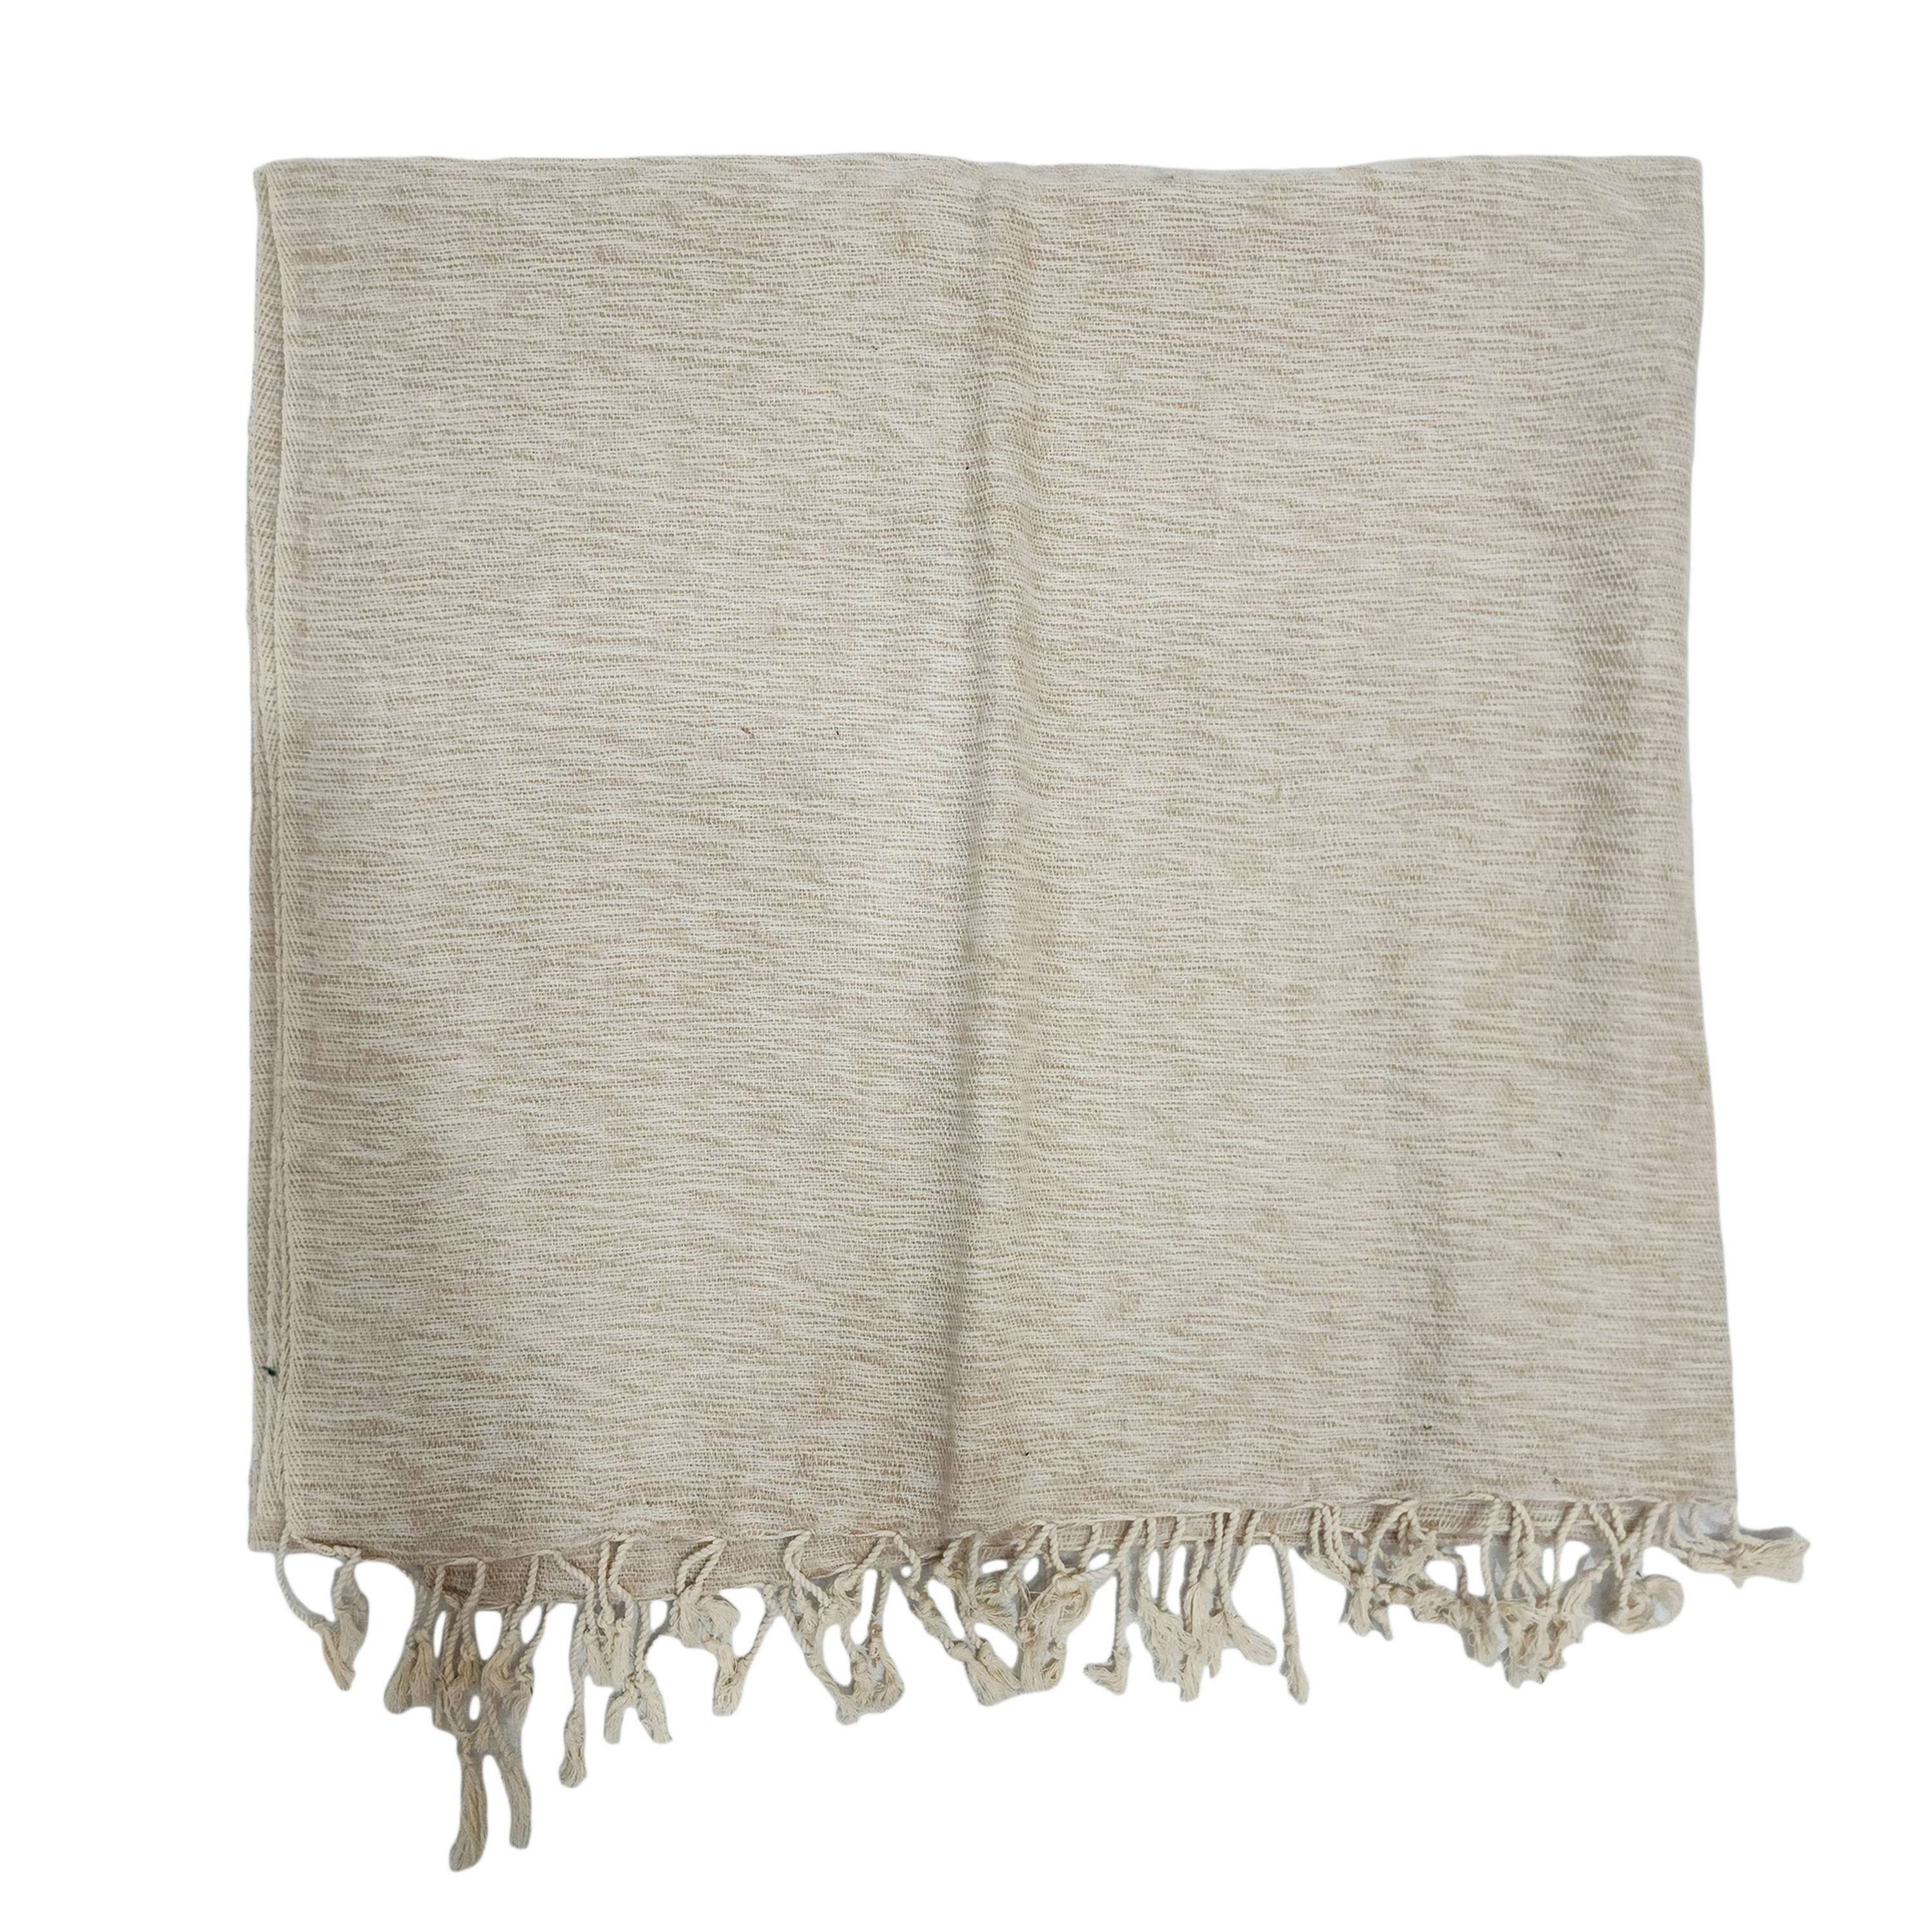 Yak Wool Blanket, Nepali Acrylic Hand Loom Blanket, Color grayish-brown